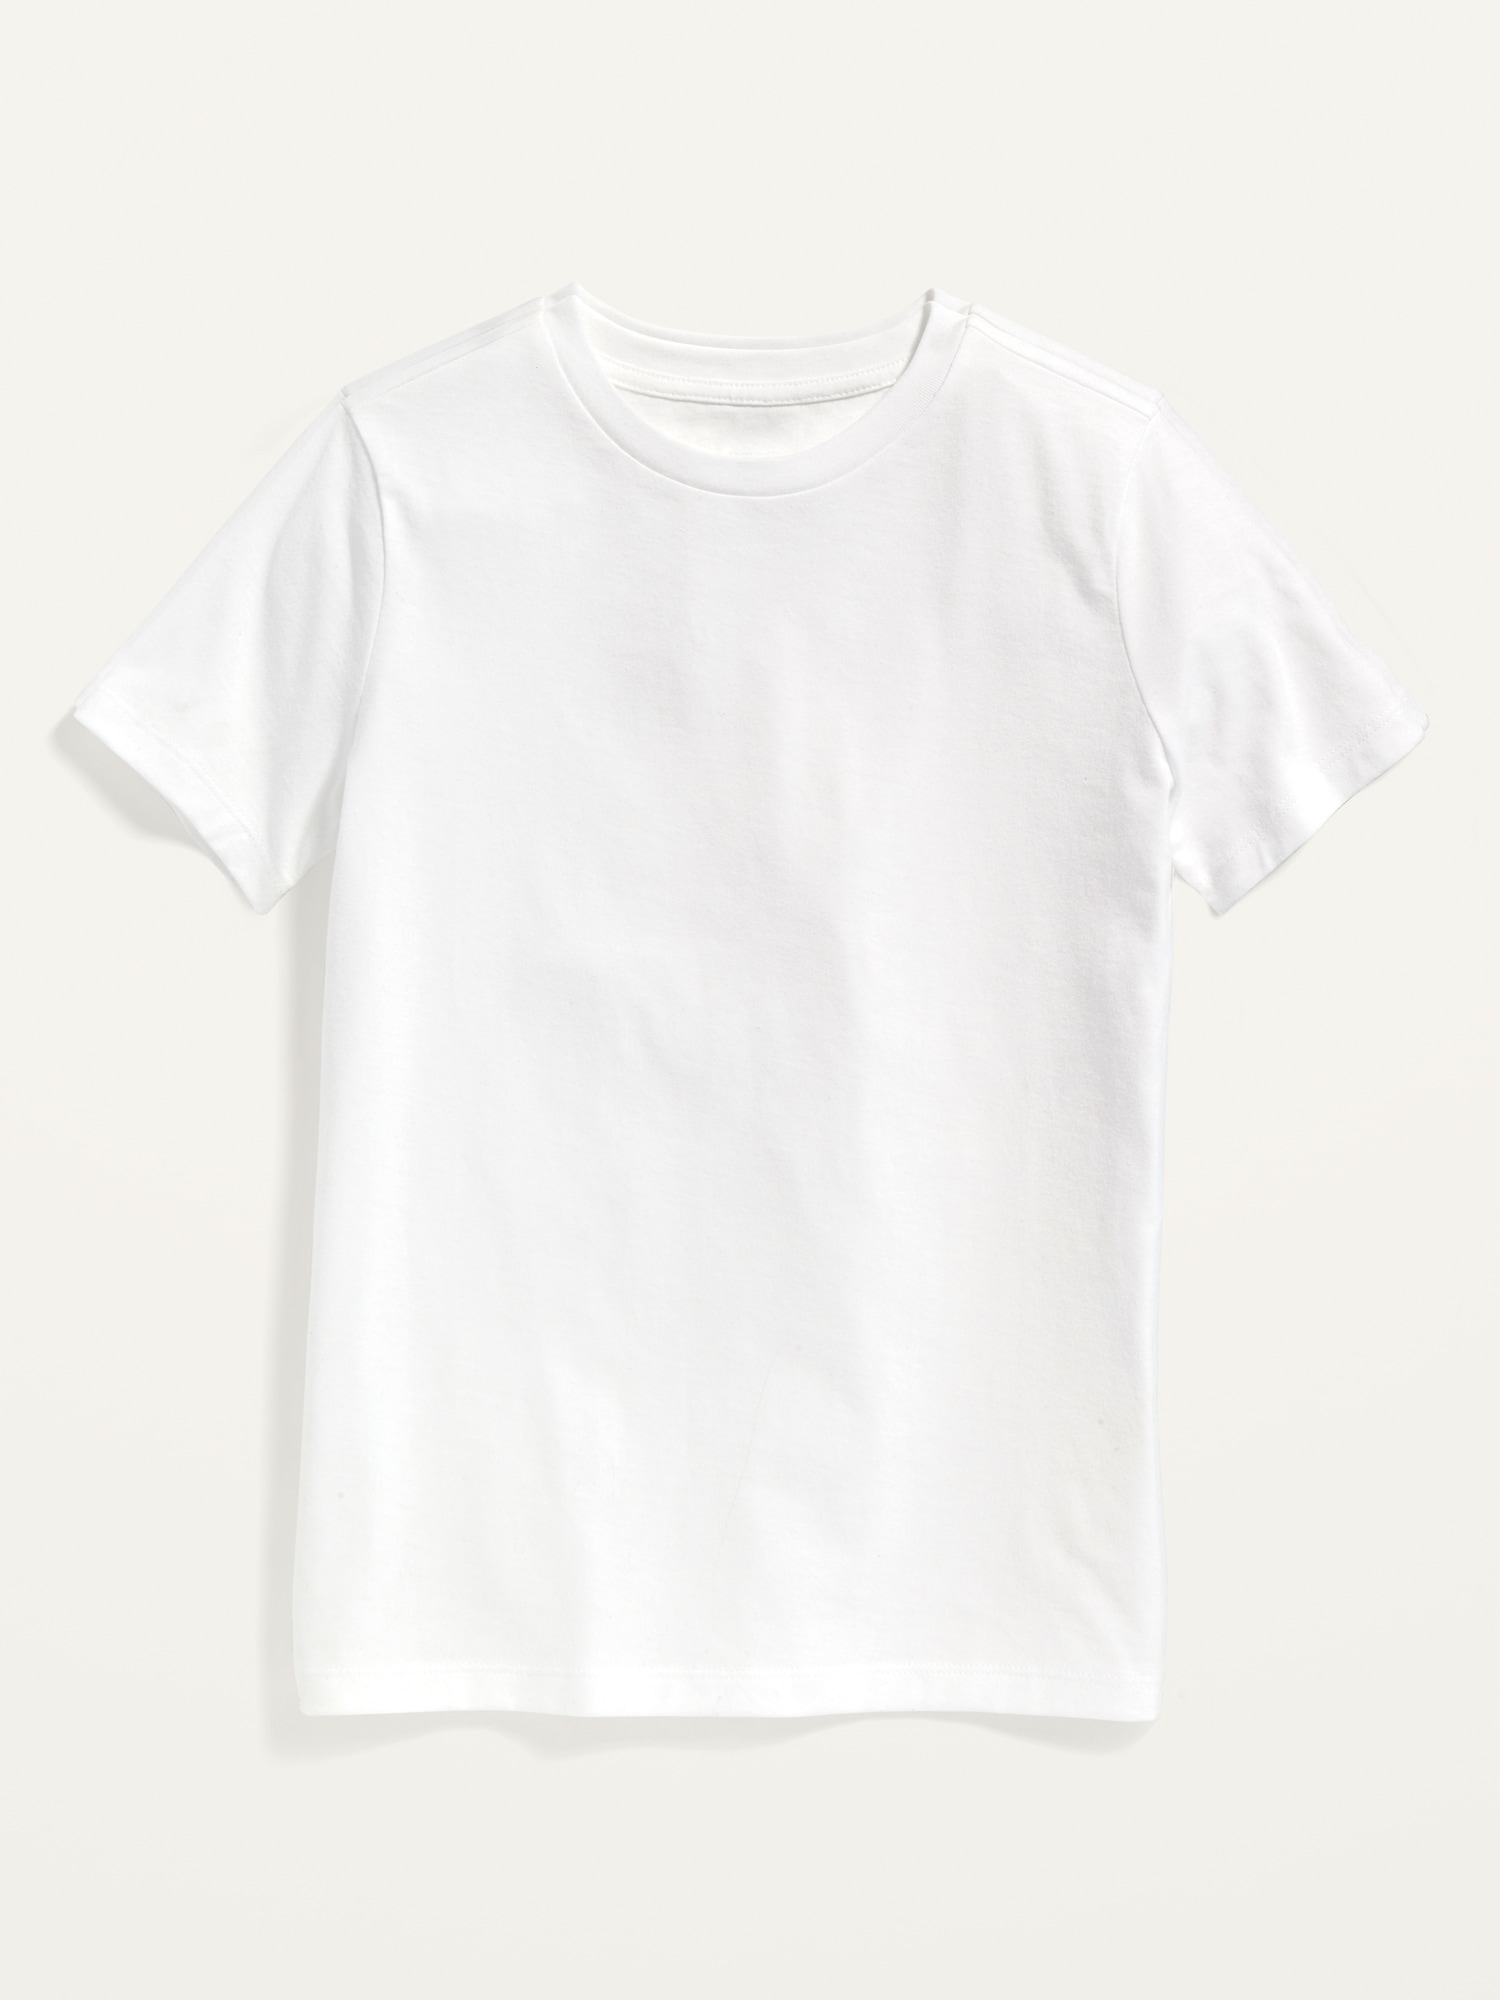 Old Navy Softest Crew-Neck T-Shirt for Boys white. 1